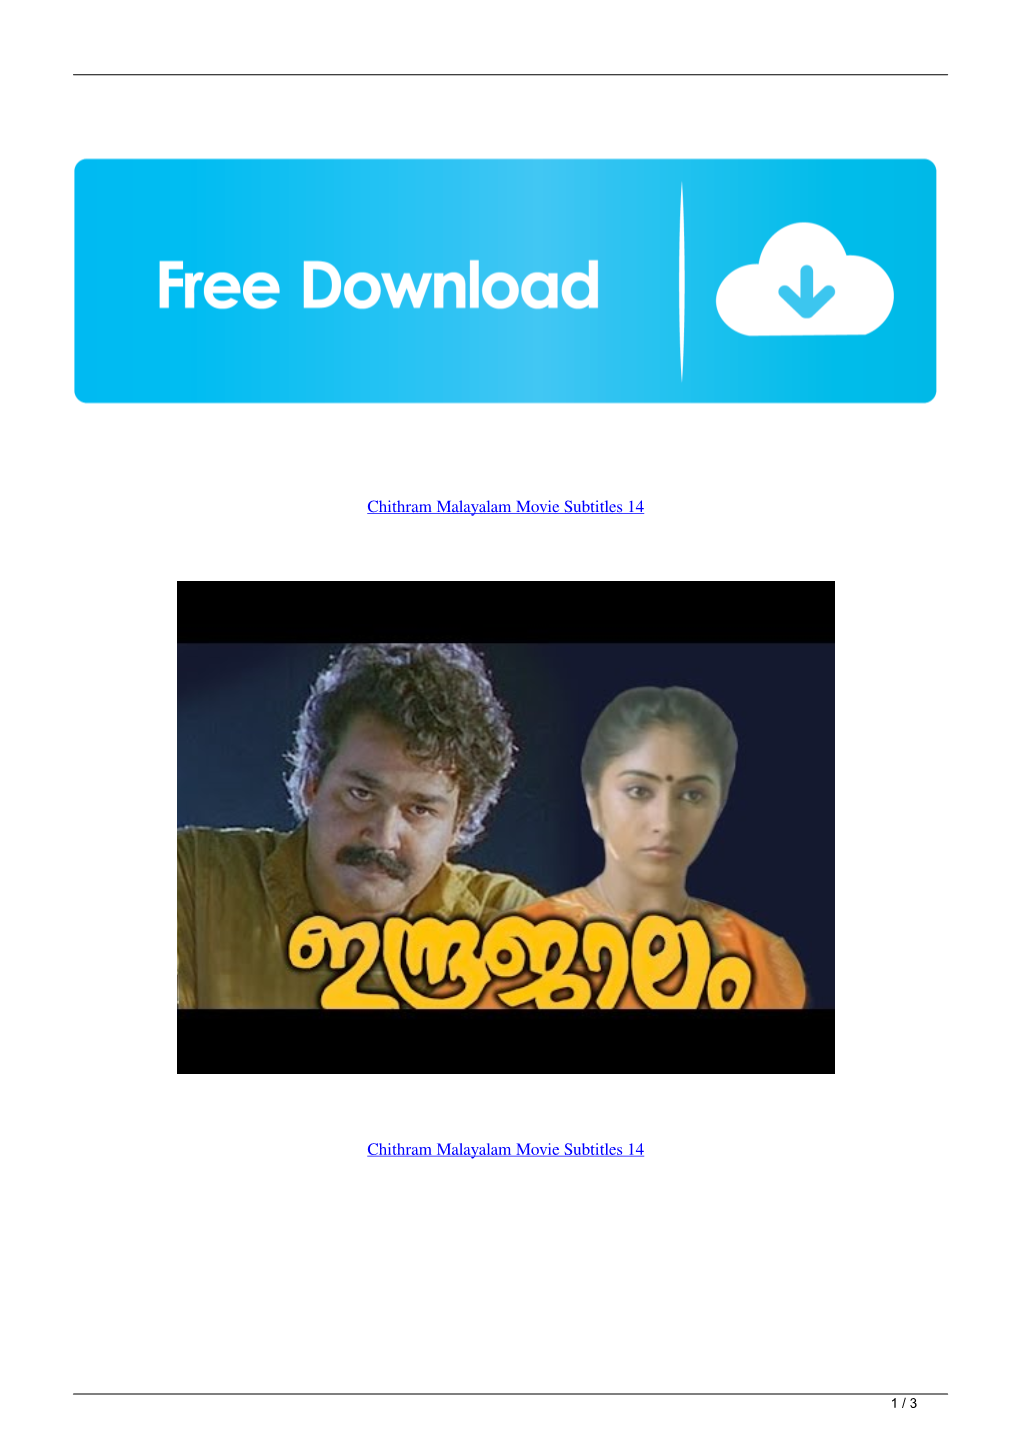 Chithram Malayalam Movie Subtitles 14